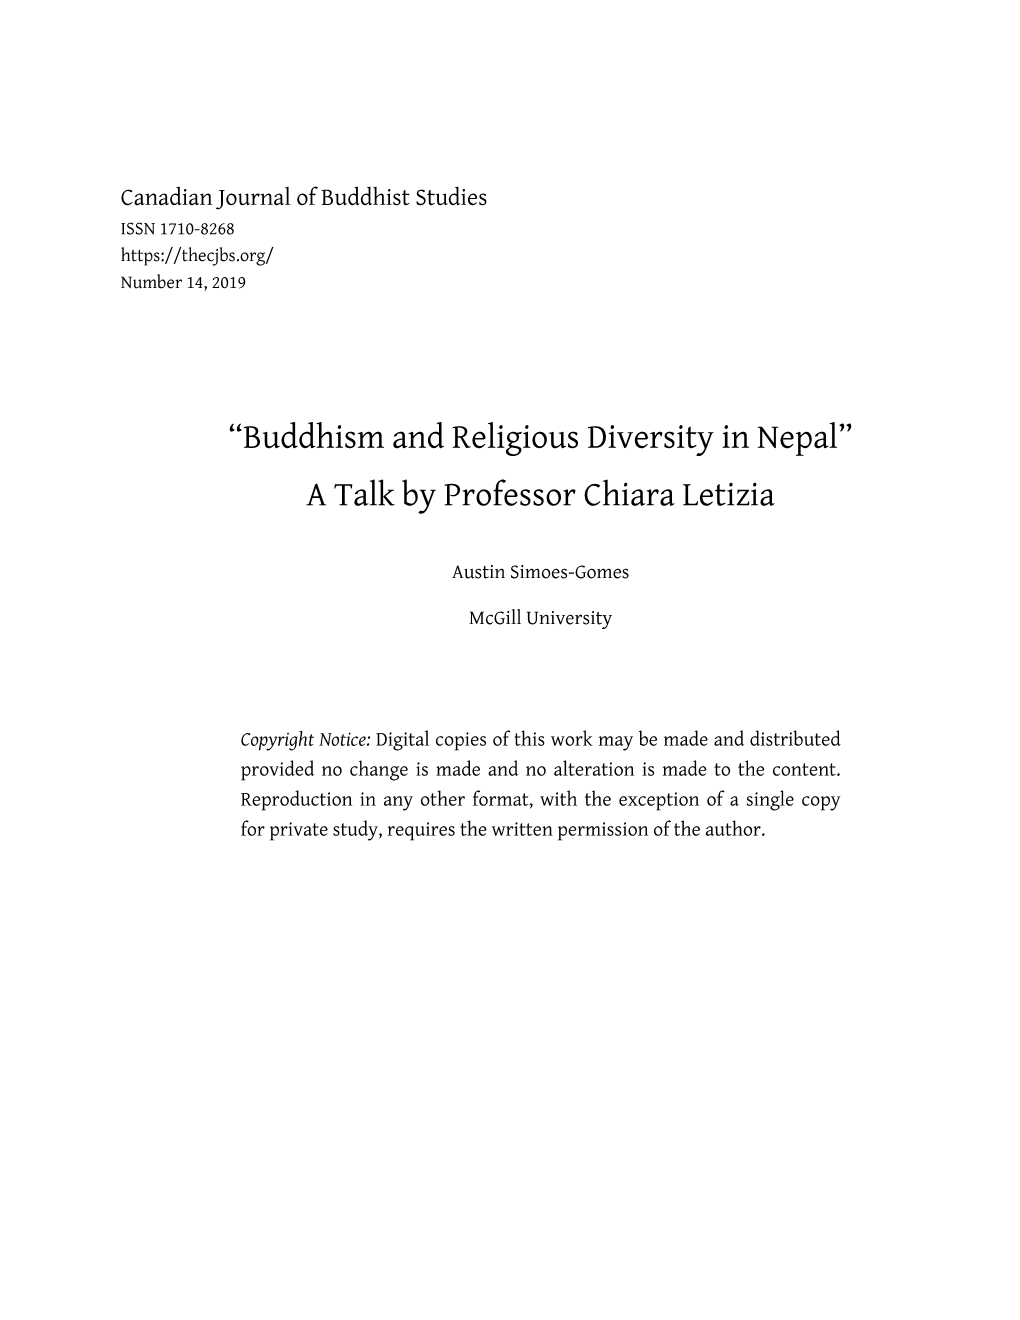 Buddhism and Religious Diversity in Nepal” a Talk by Professor Chiara Letizia